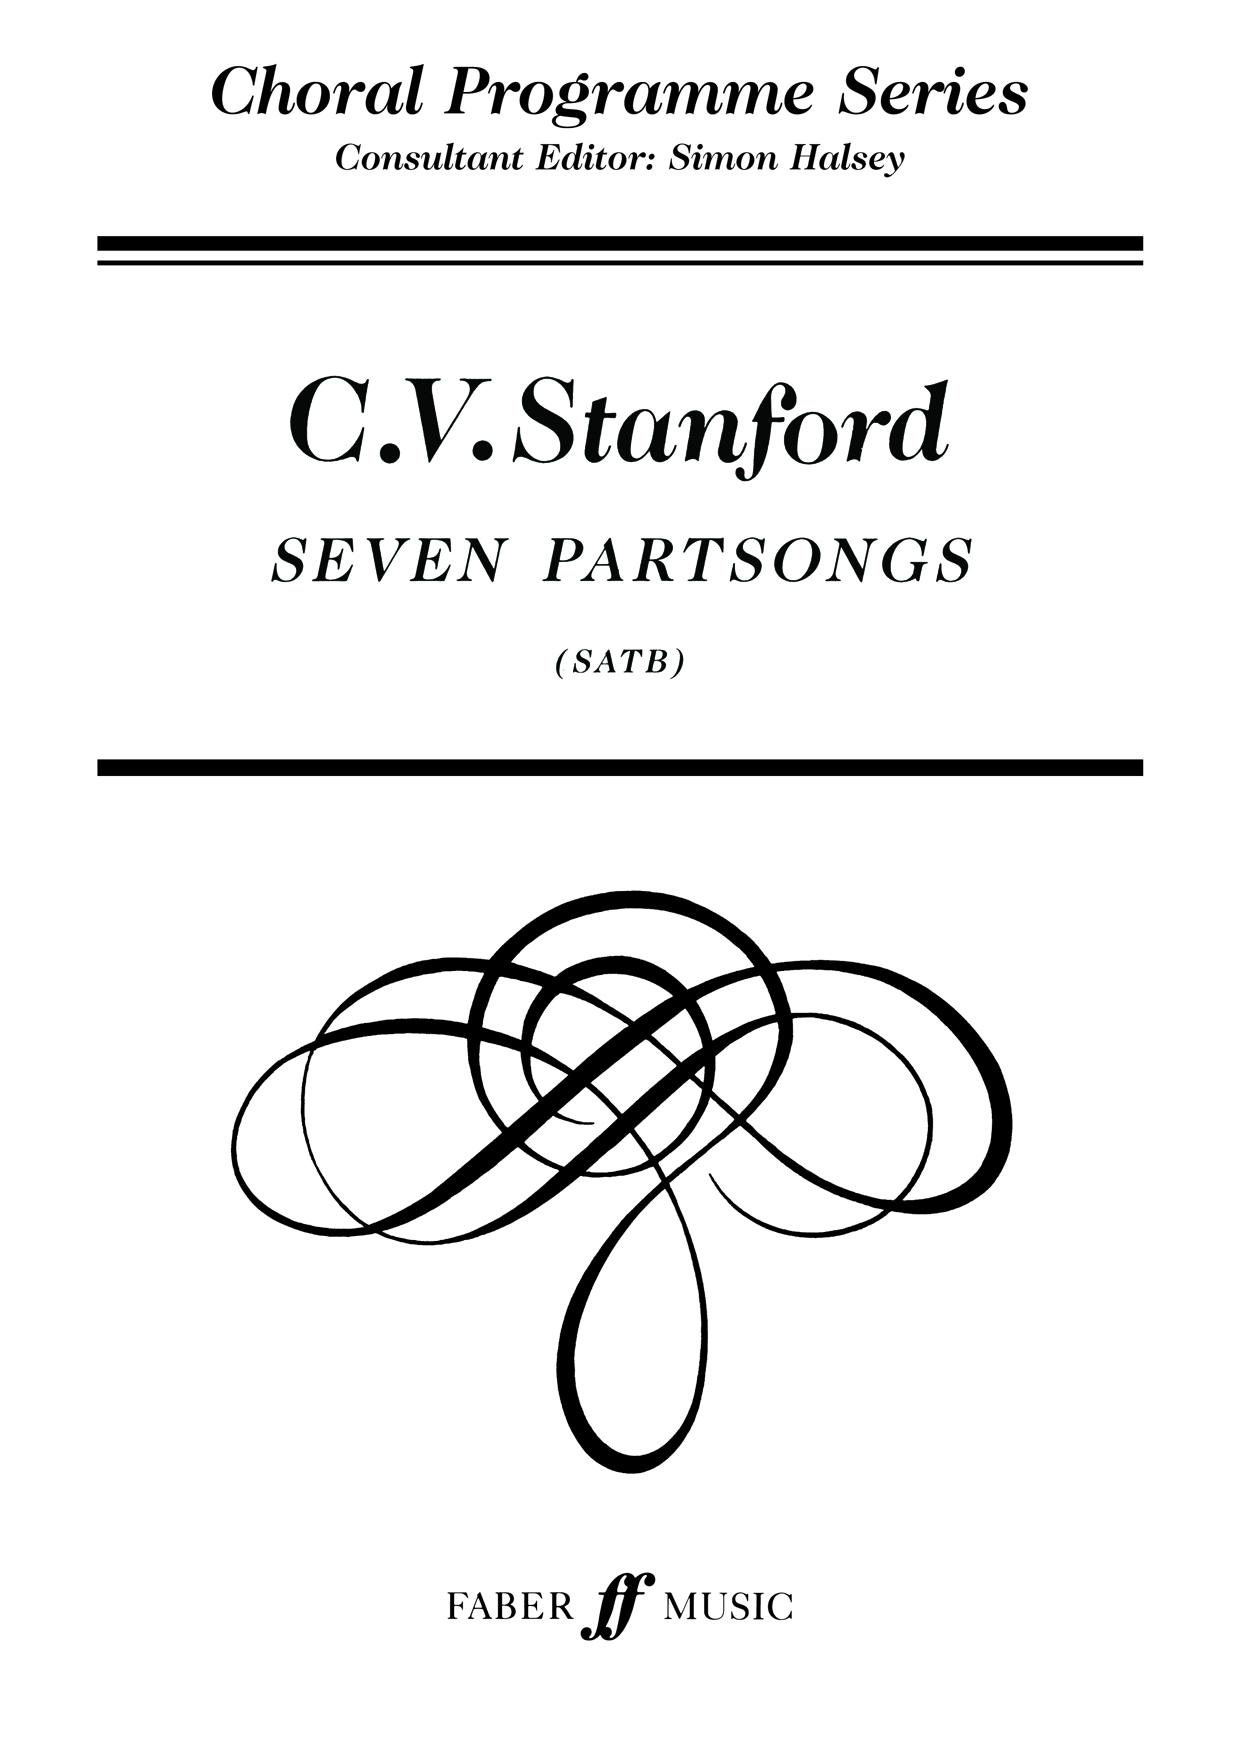 7 Partsongs. SATB Unacc. (Cps) (STANFORD CHARLES VILLIERS)